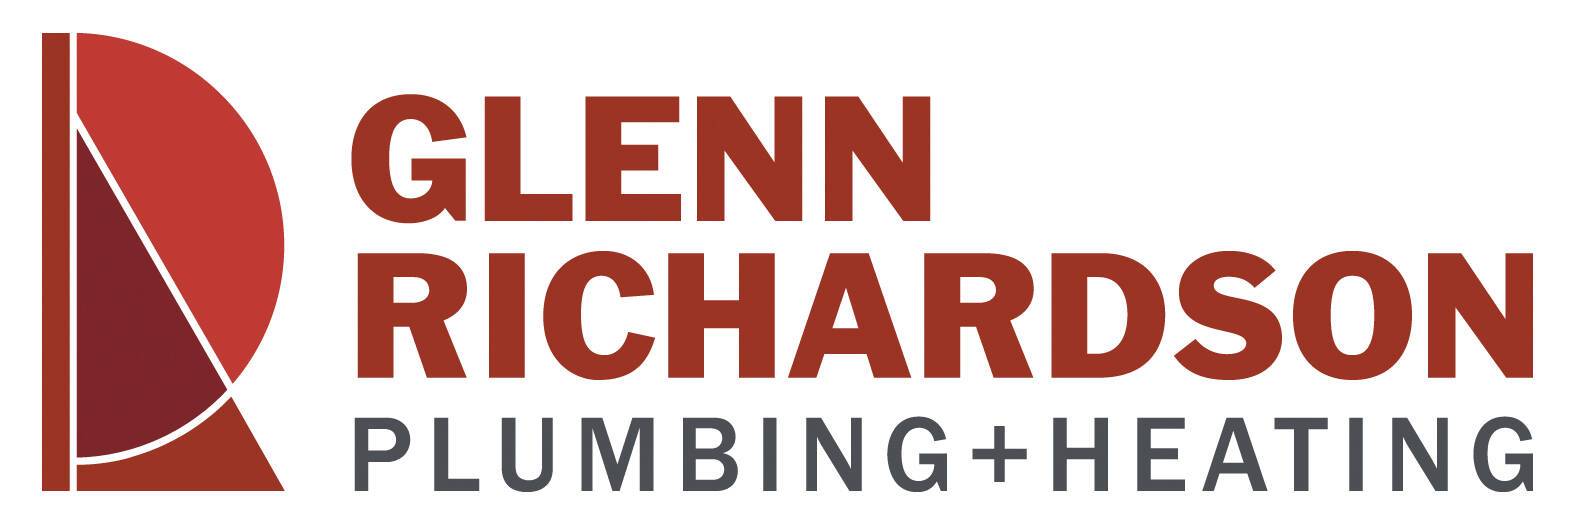 Glenn Richardson Plumbing and Heating